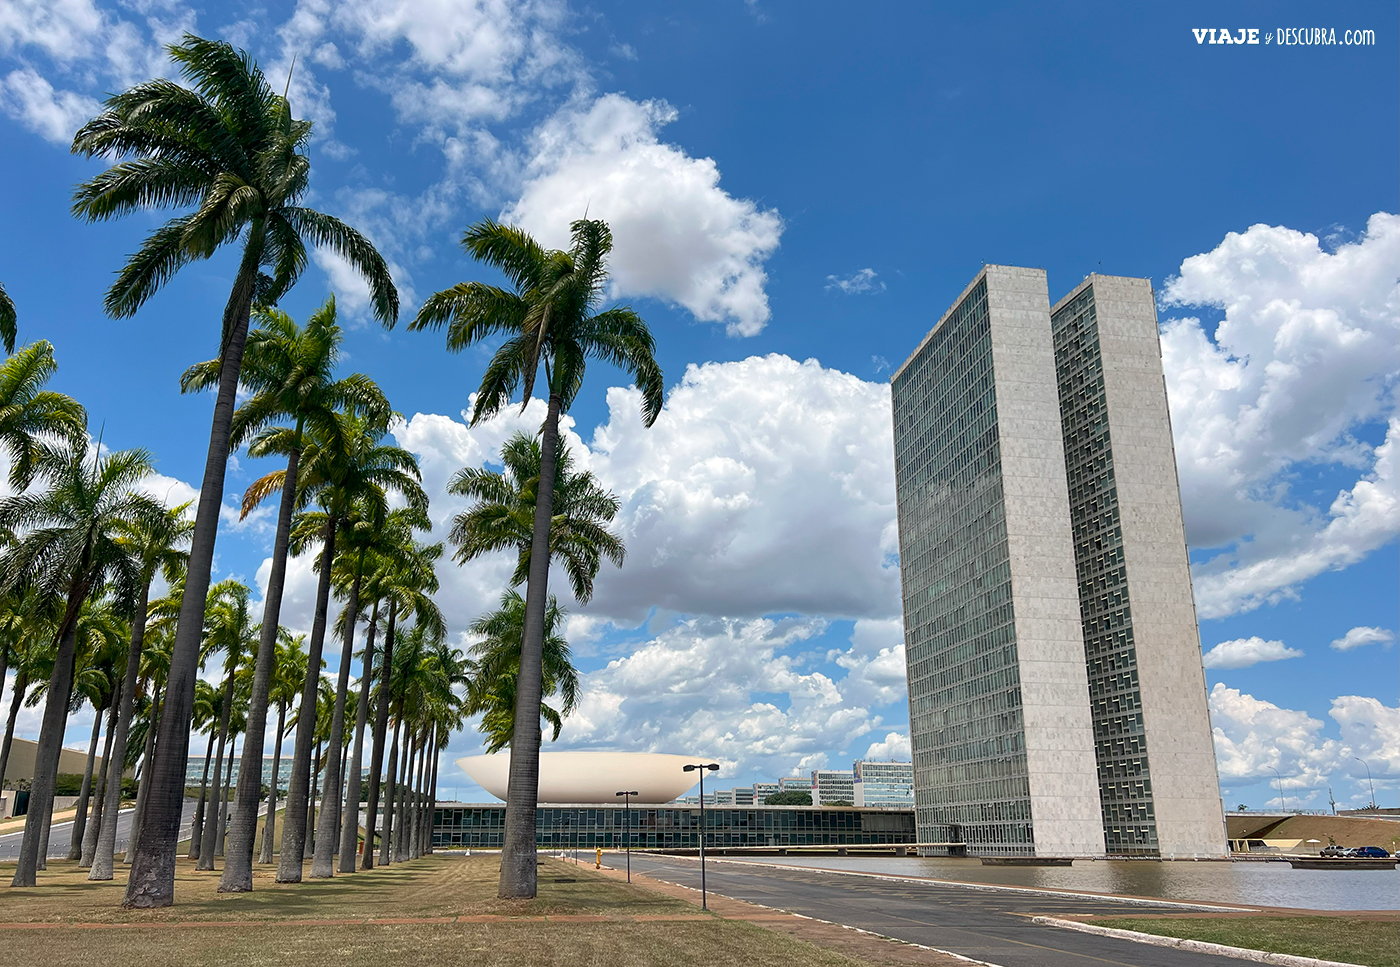 Congreso Brasilia, que hacer en Brasilia en 3 días